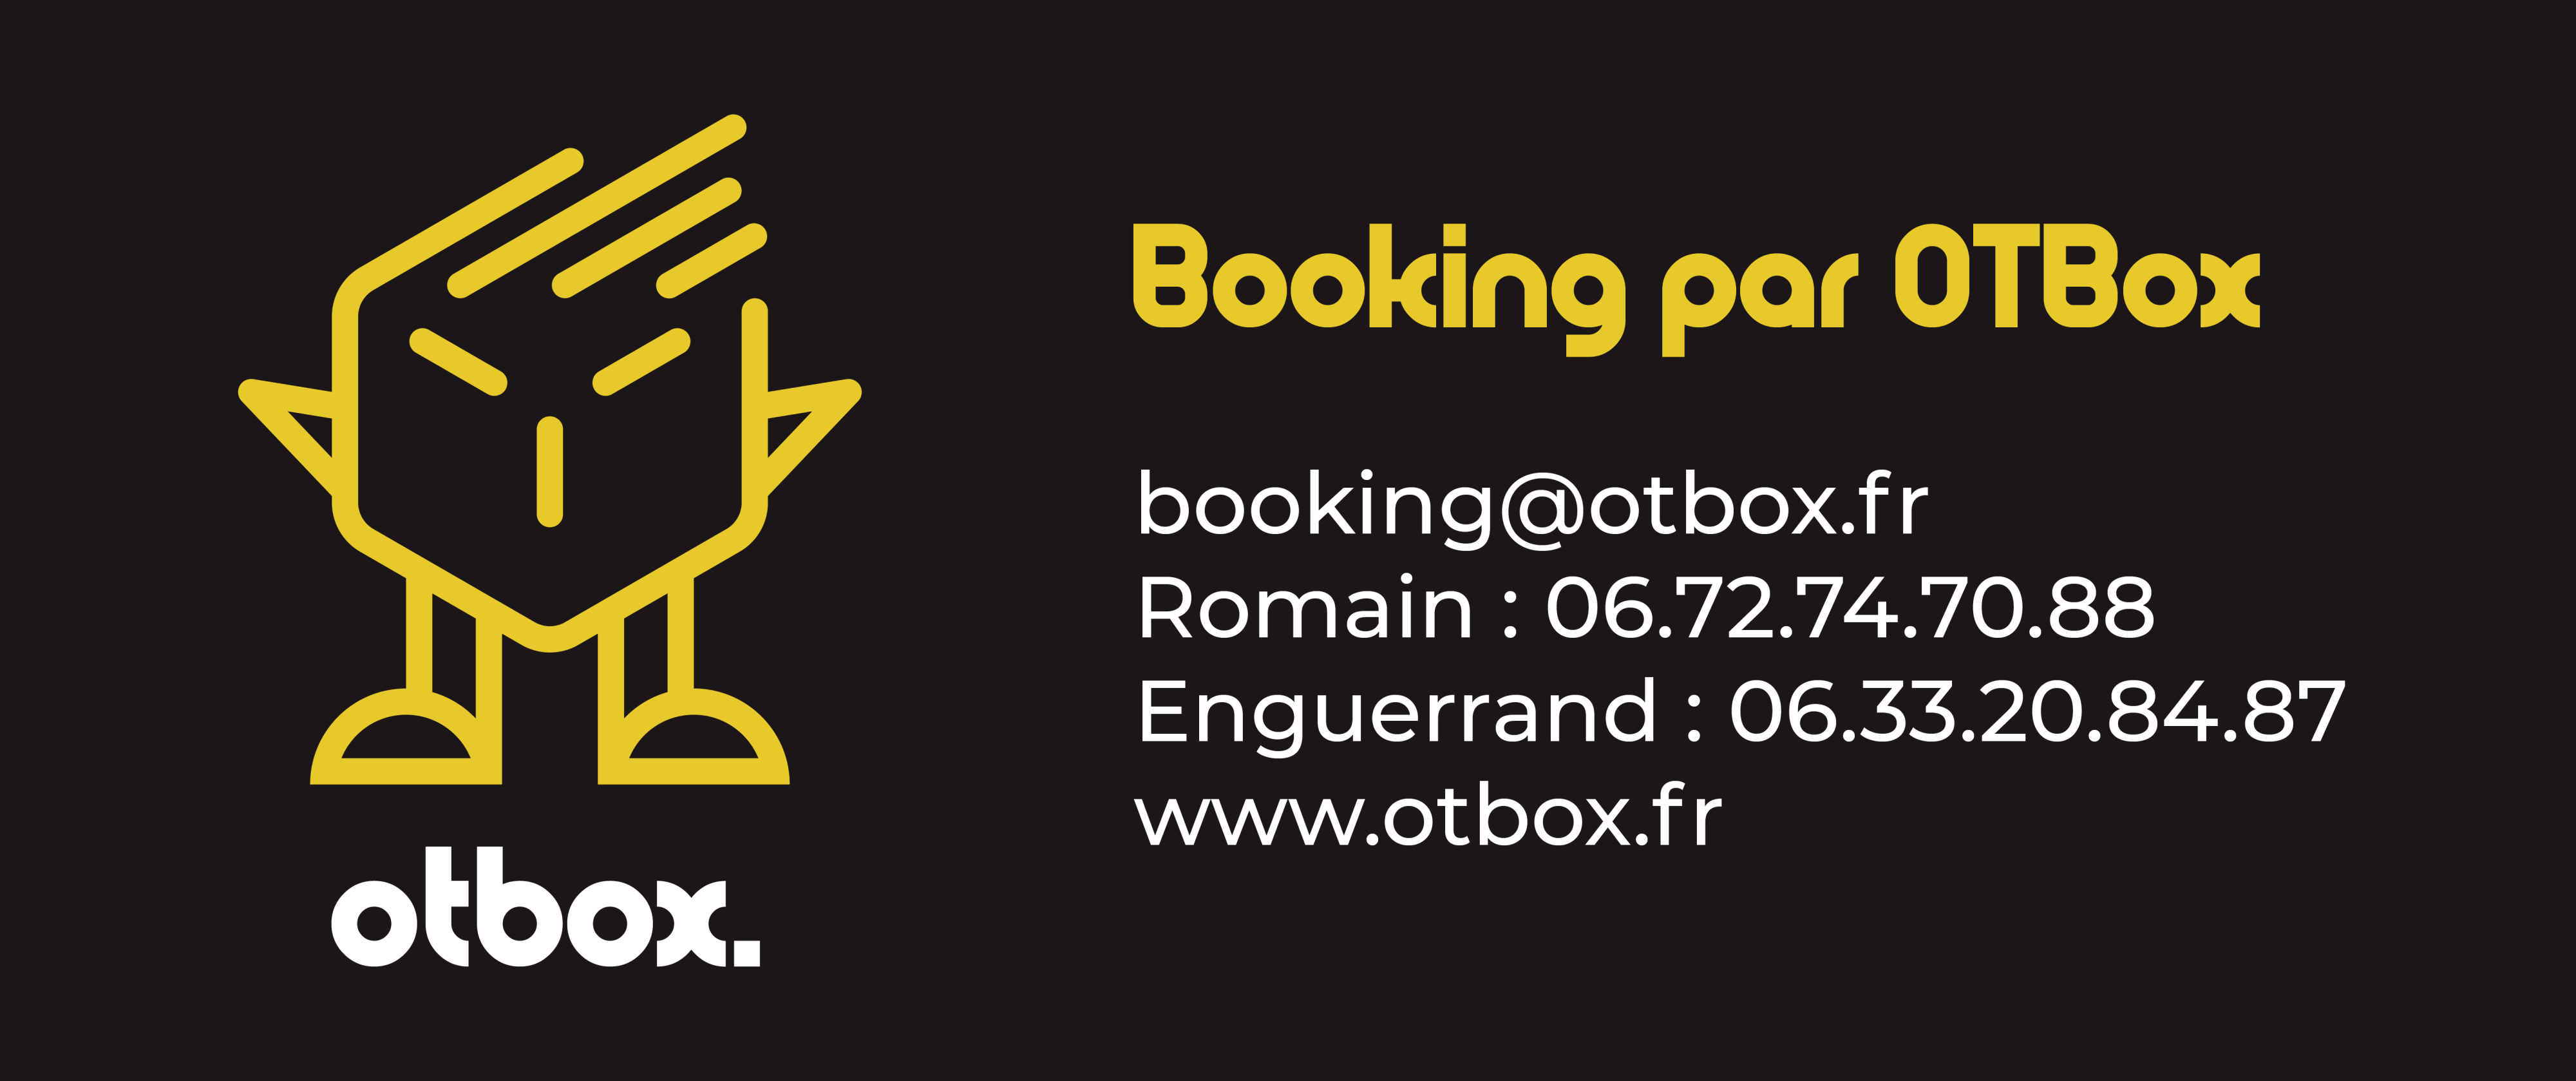 Anita Dongilli - Booking par OTBox